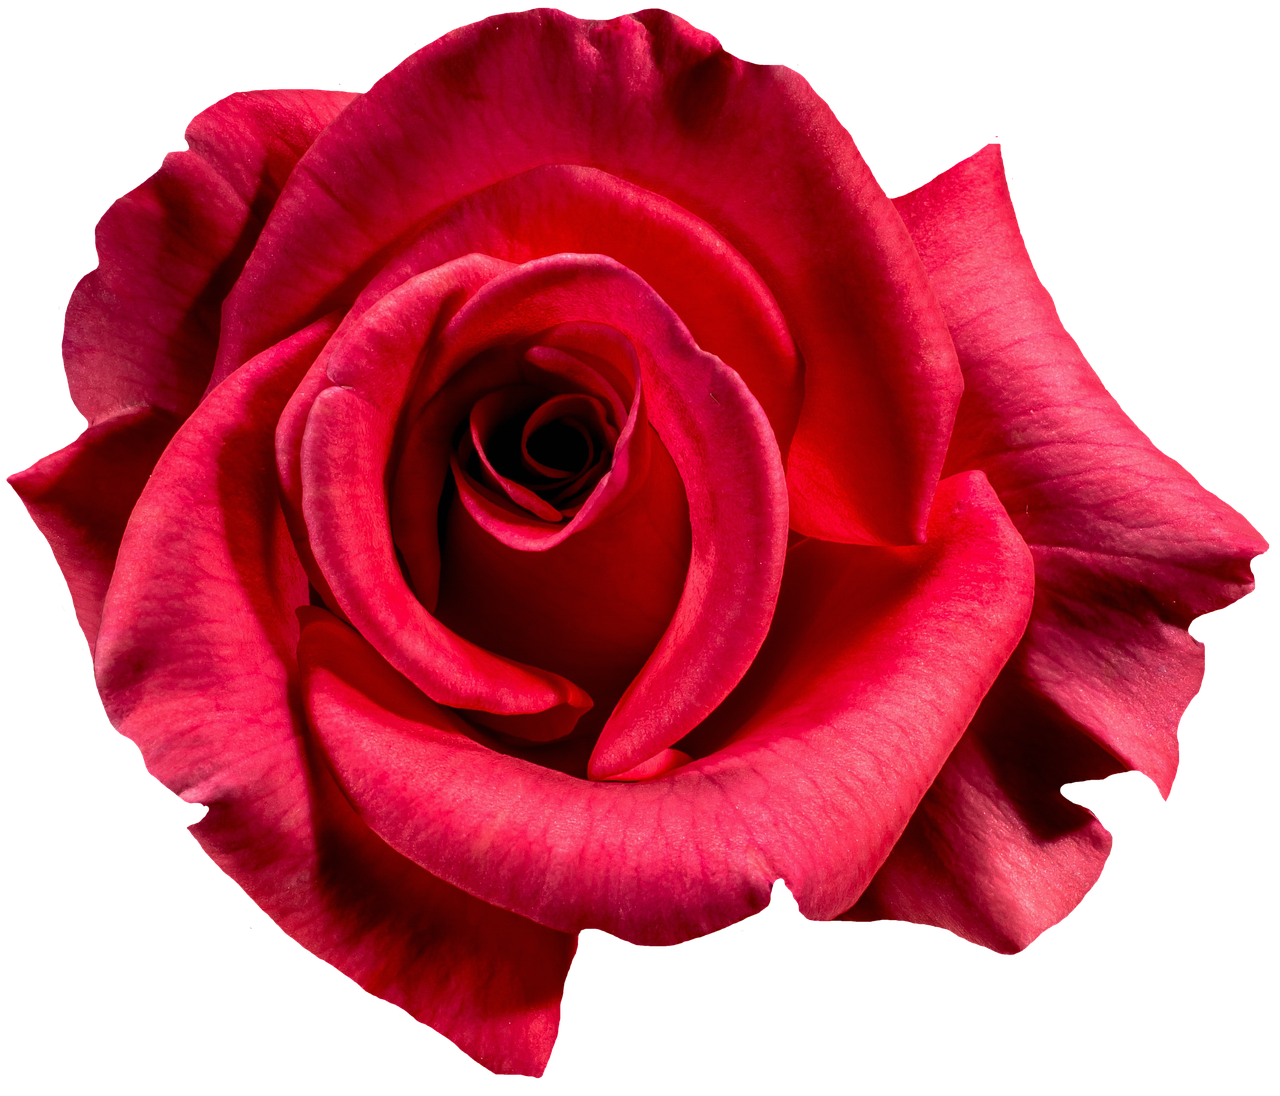 Image - rose red blossom bloom flower